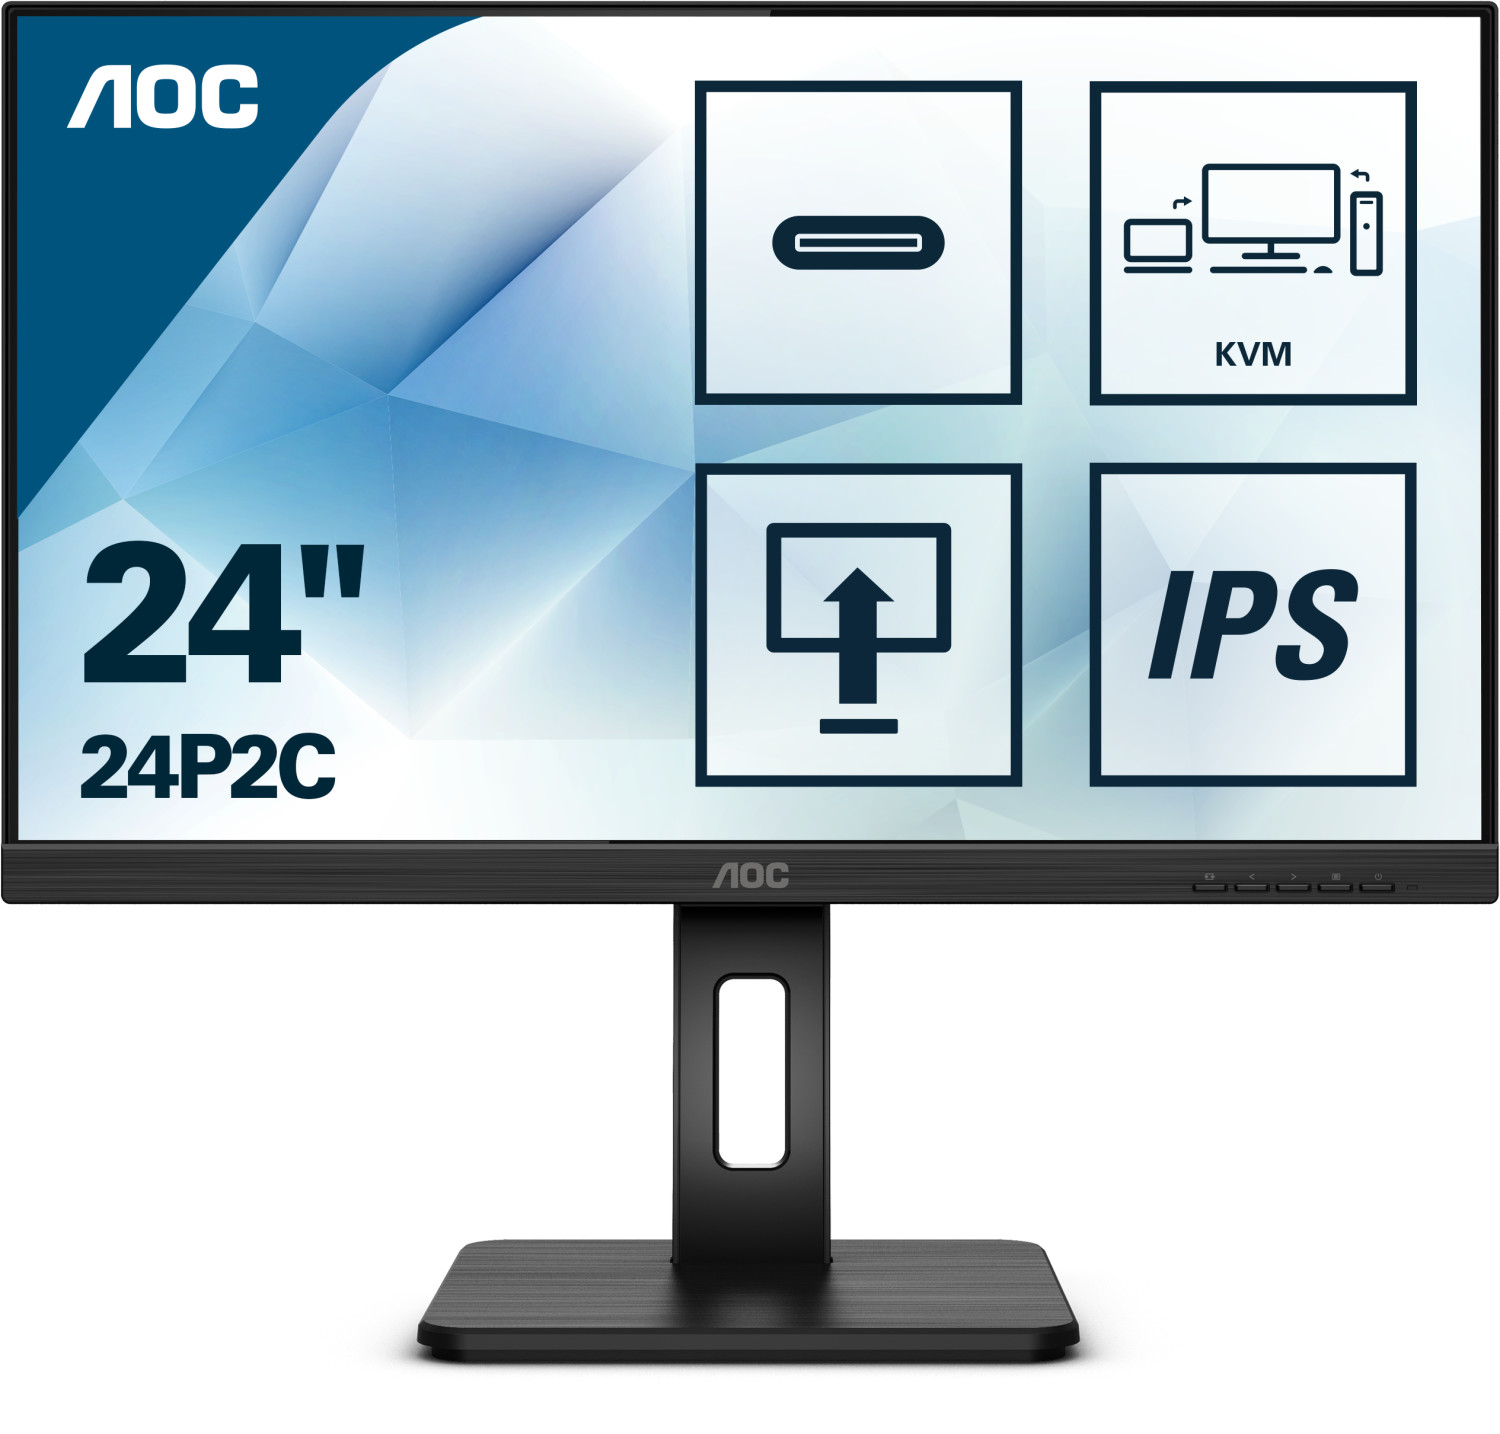 AOC 24P2C LED-Monitor (24P2C)